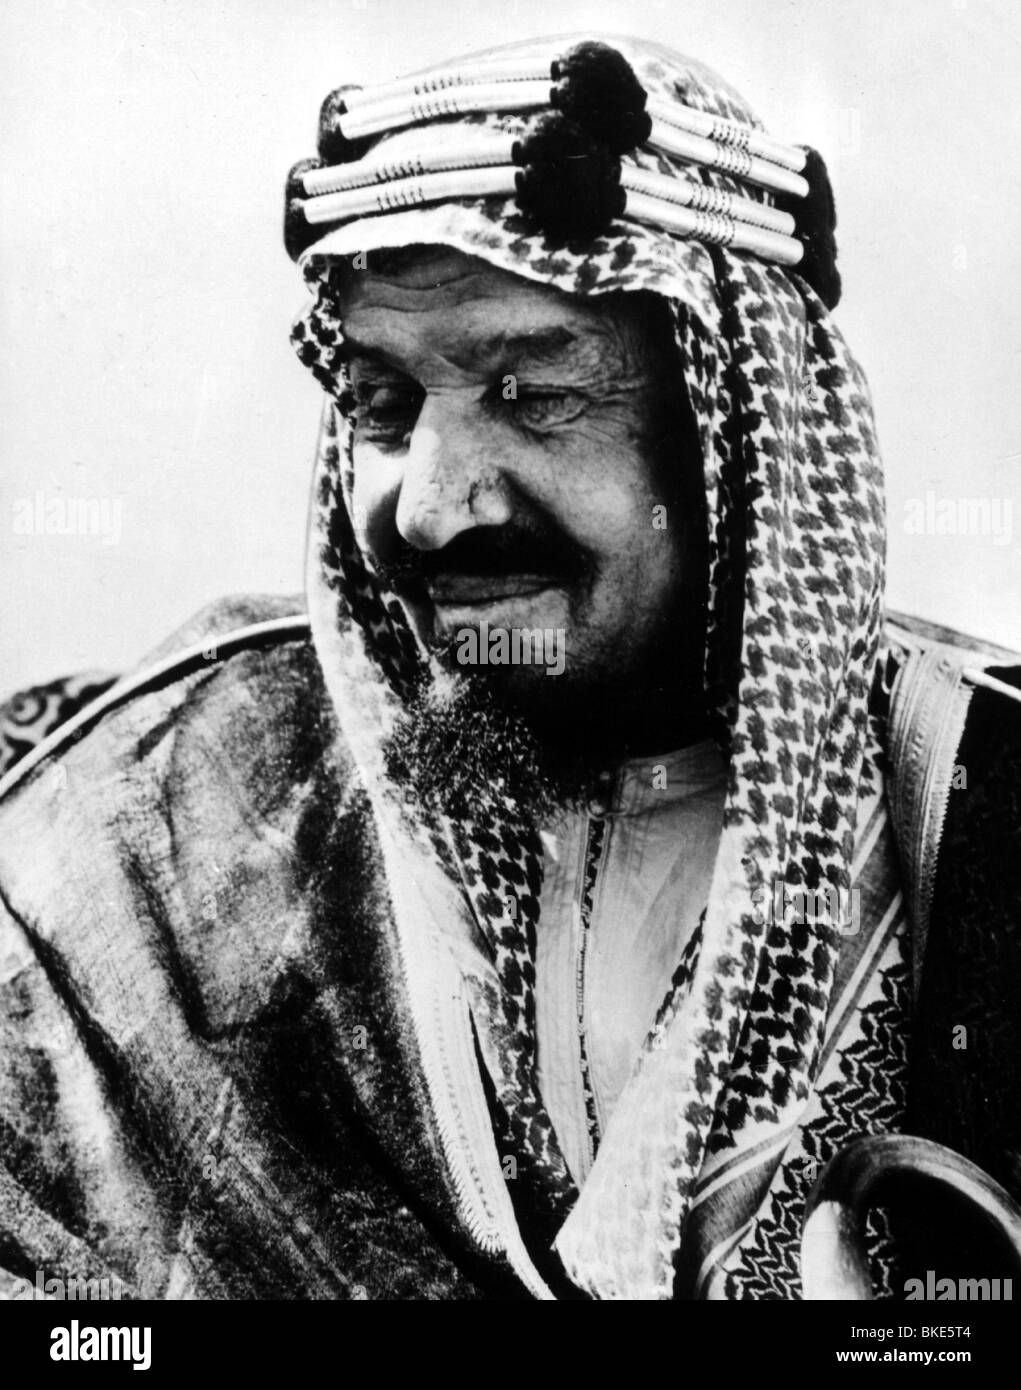 Ibn Saud, Abdul Aziz, 24.11.1880 - 9.11.1953, monarch of